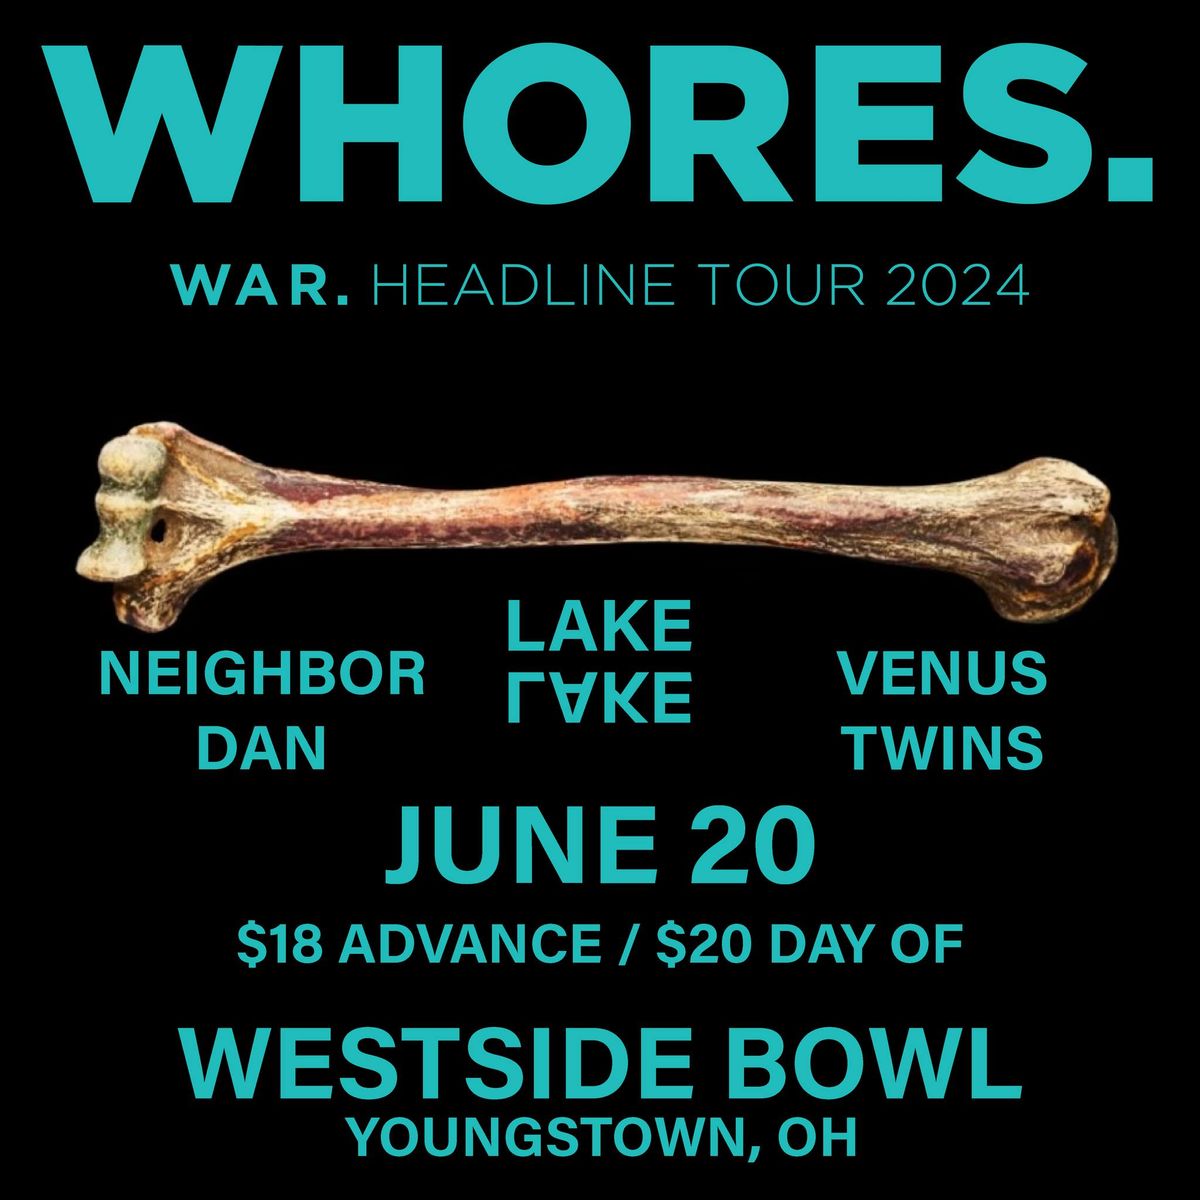 VVho.res.\/Venus Twins\/Lake Lake\/Neighbor Dan at the Westside Bowl